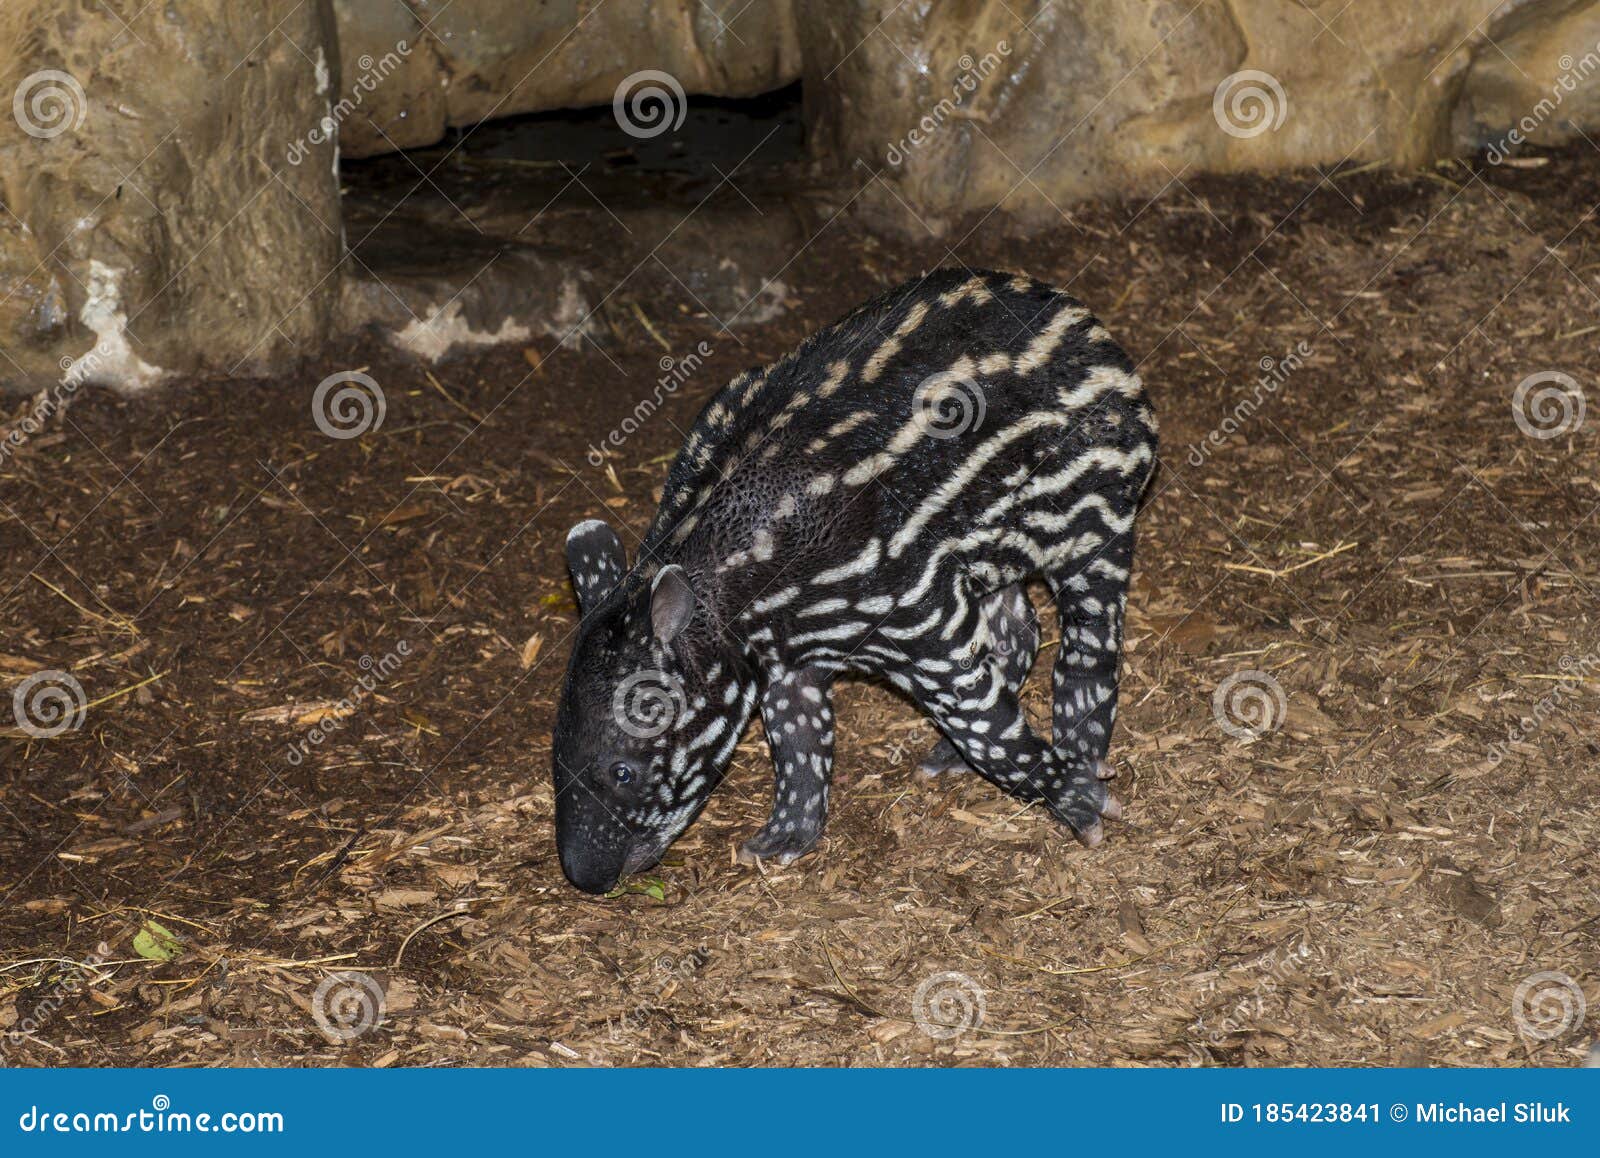 a baby malayan tapir in his pen